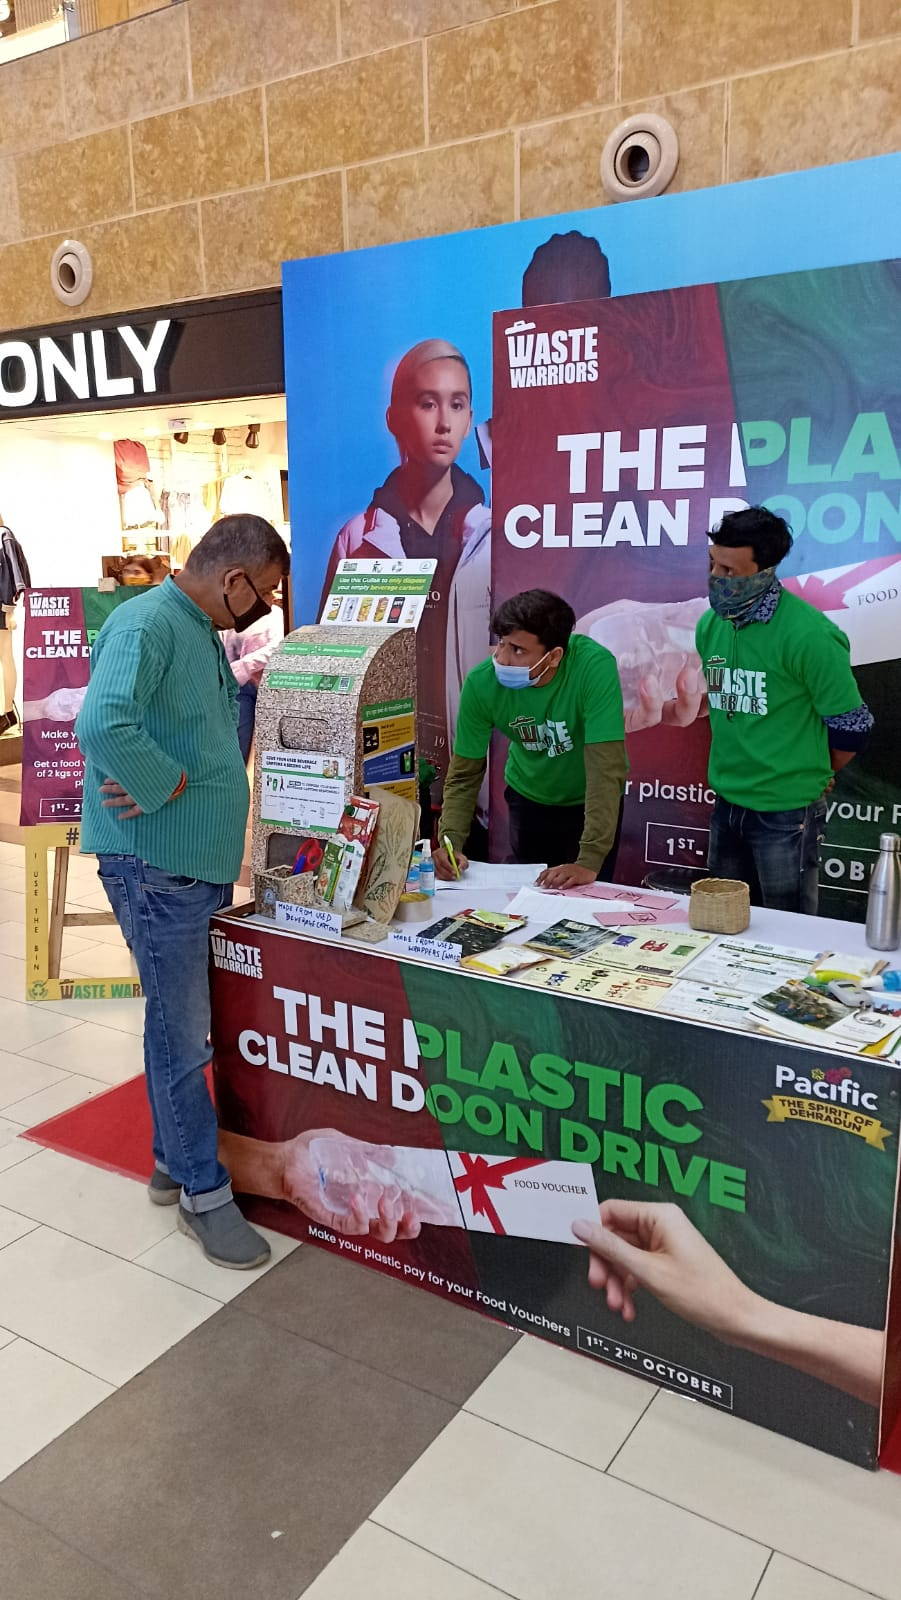 Pacific Mall Dehradun launches-’The Plastic Clean Doon Drive’